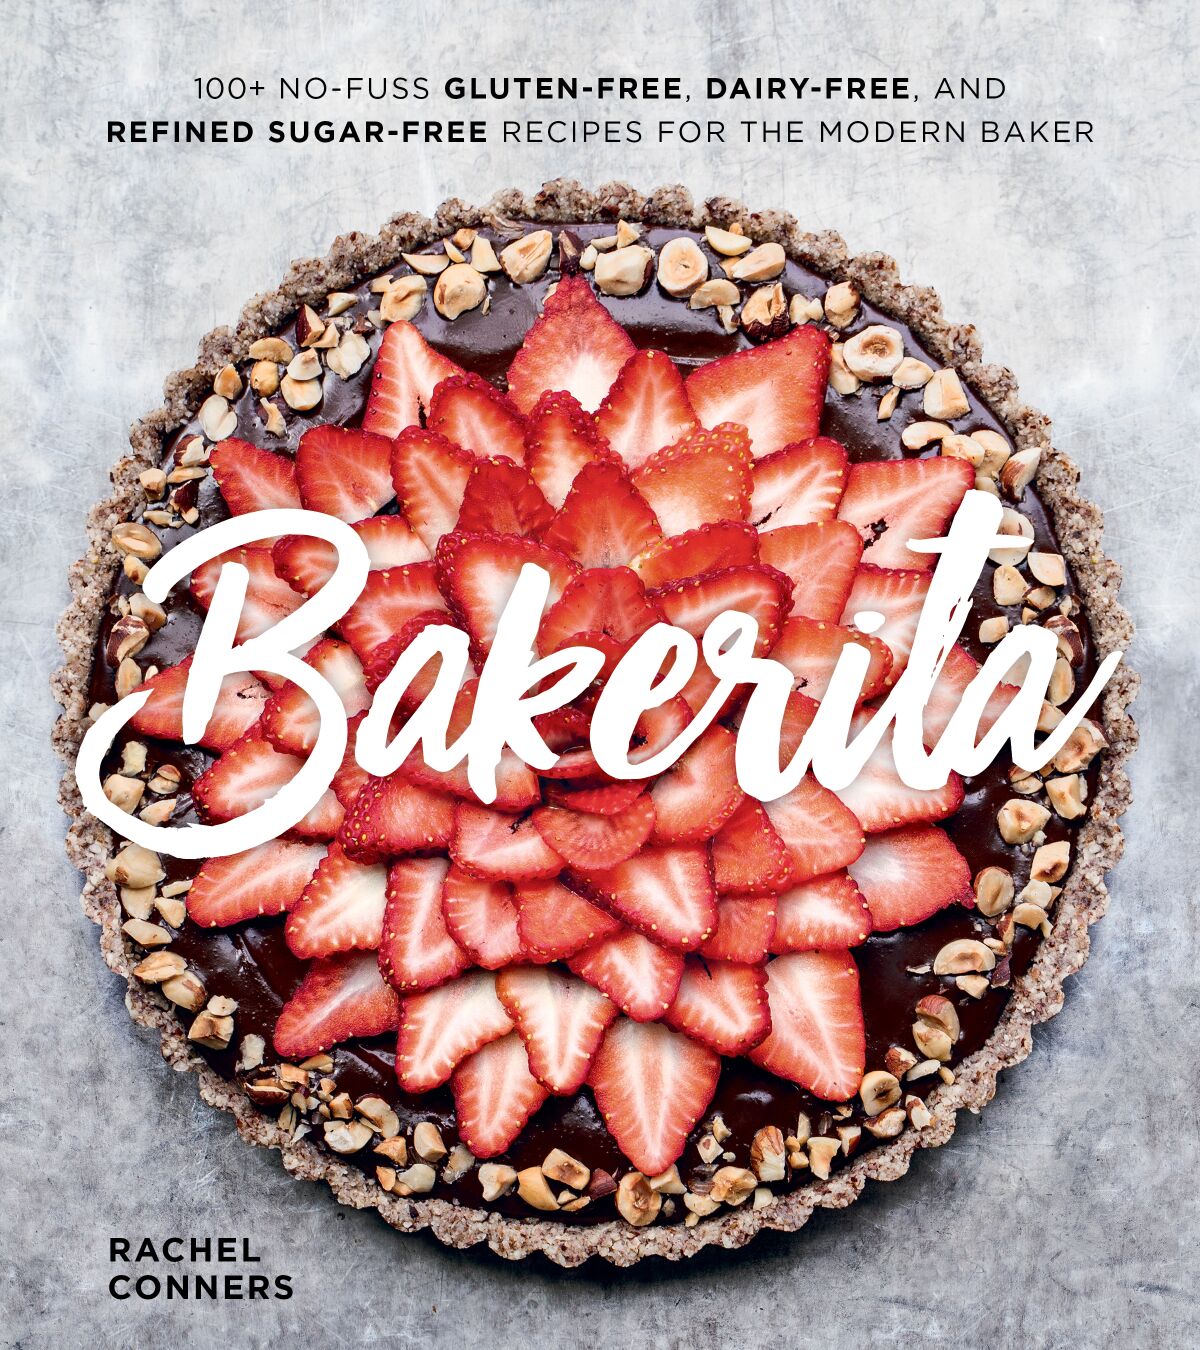 The cover of Rachel Conners' cookbook, "Bakerita."